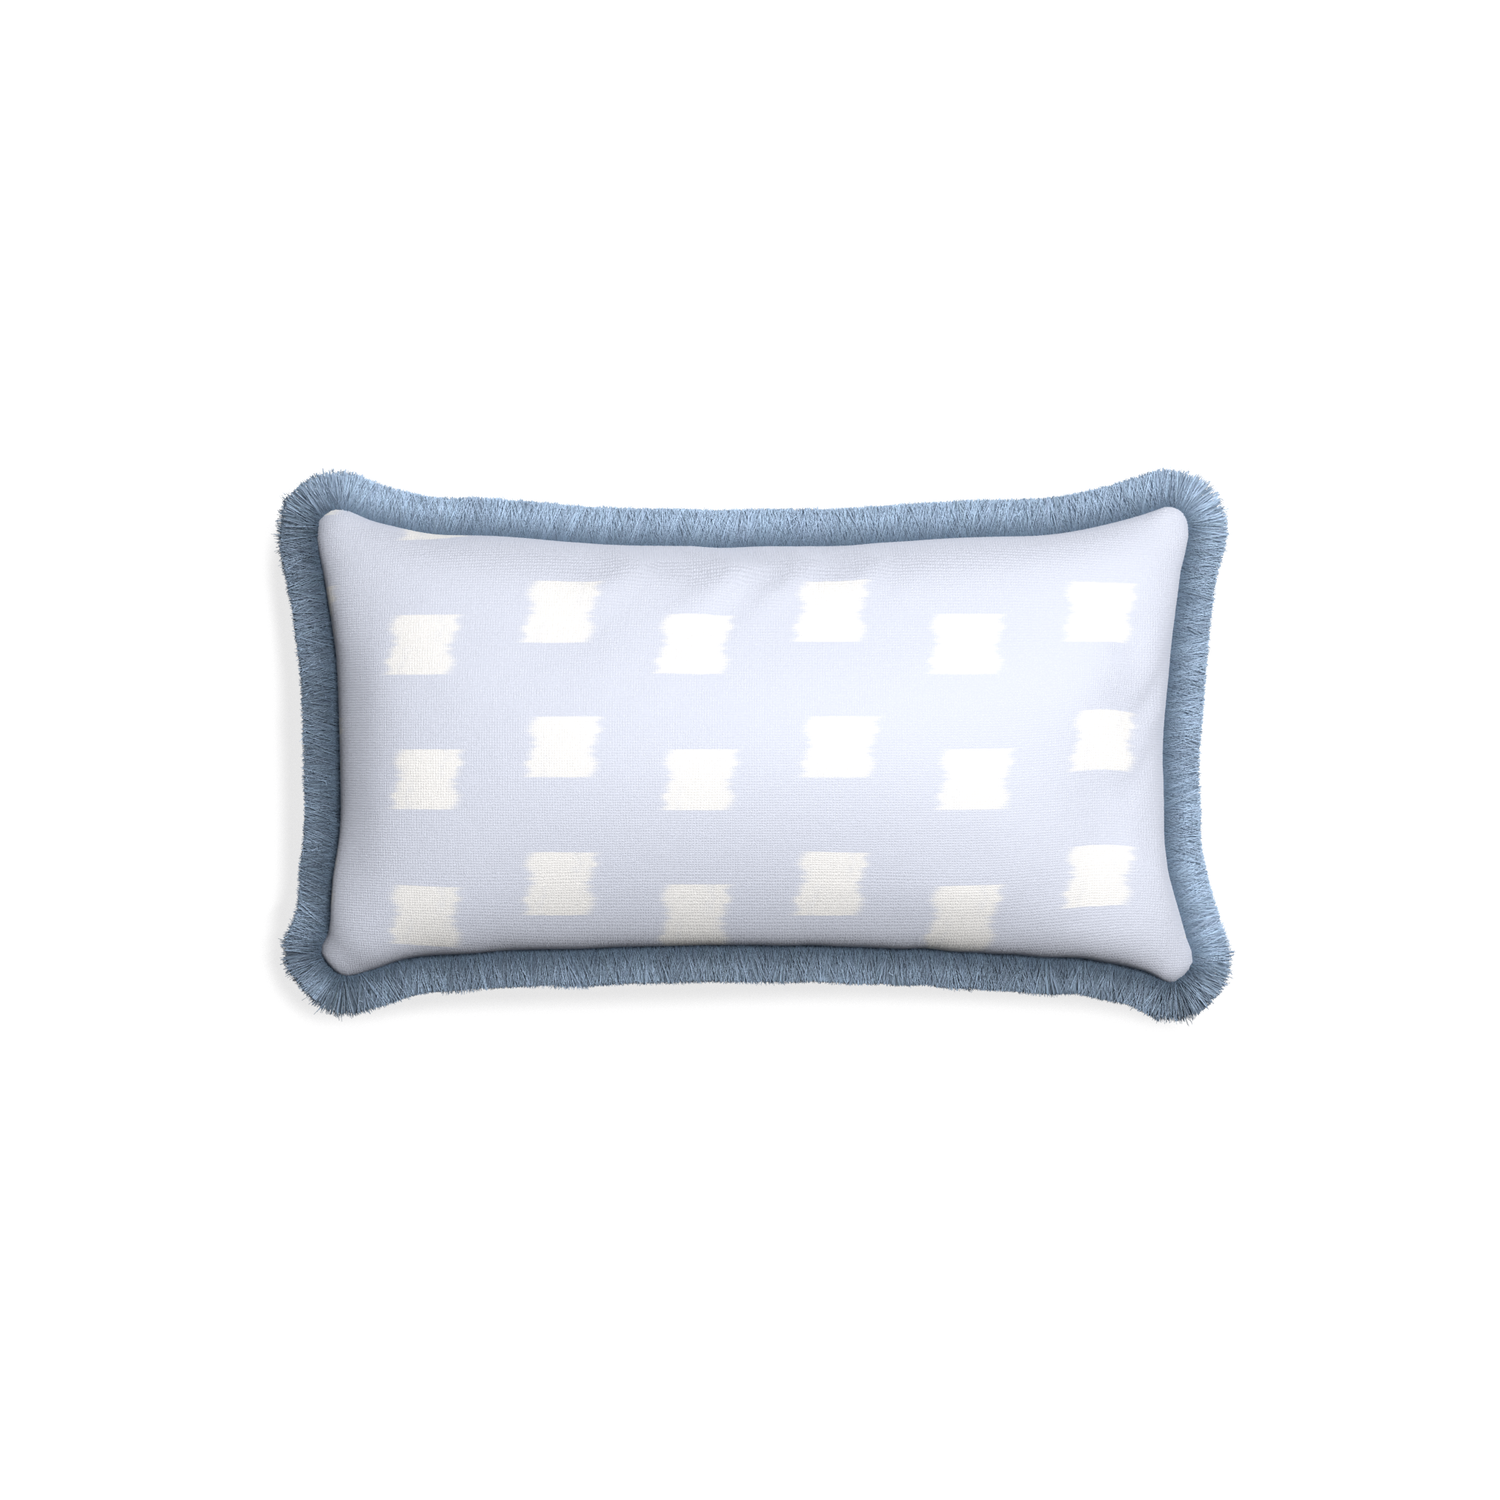 Petite-lumbar denton custom sky blue patternpillow with sky fringe on white background